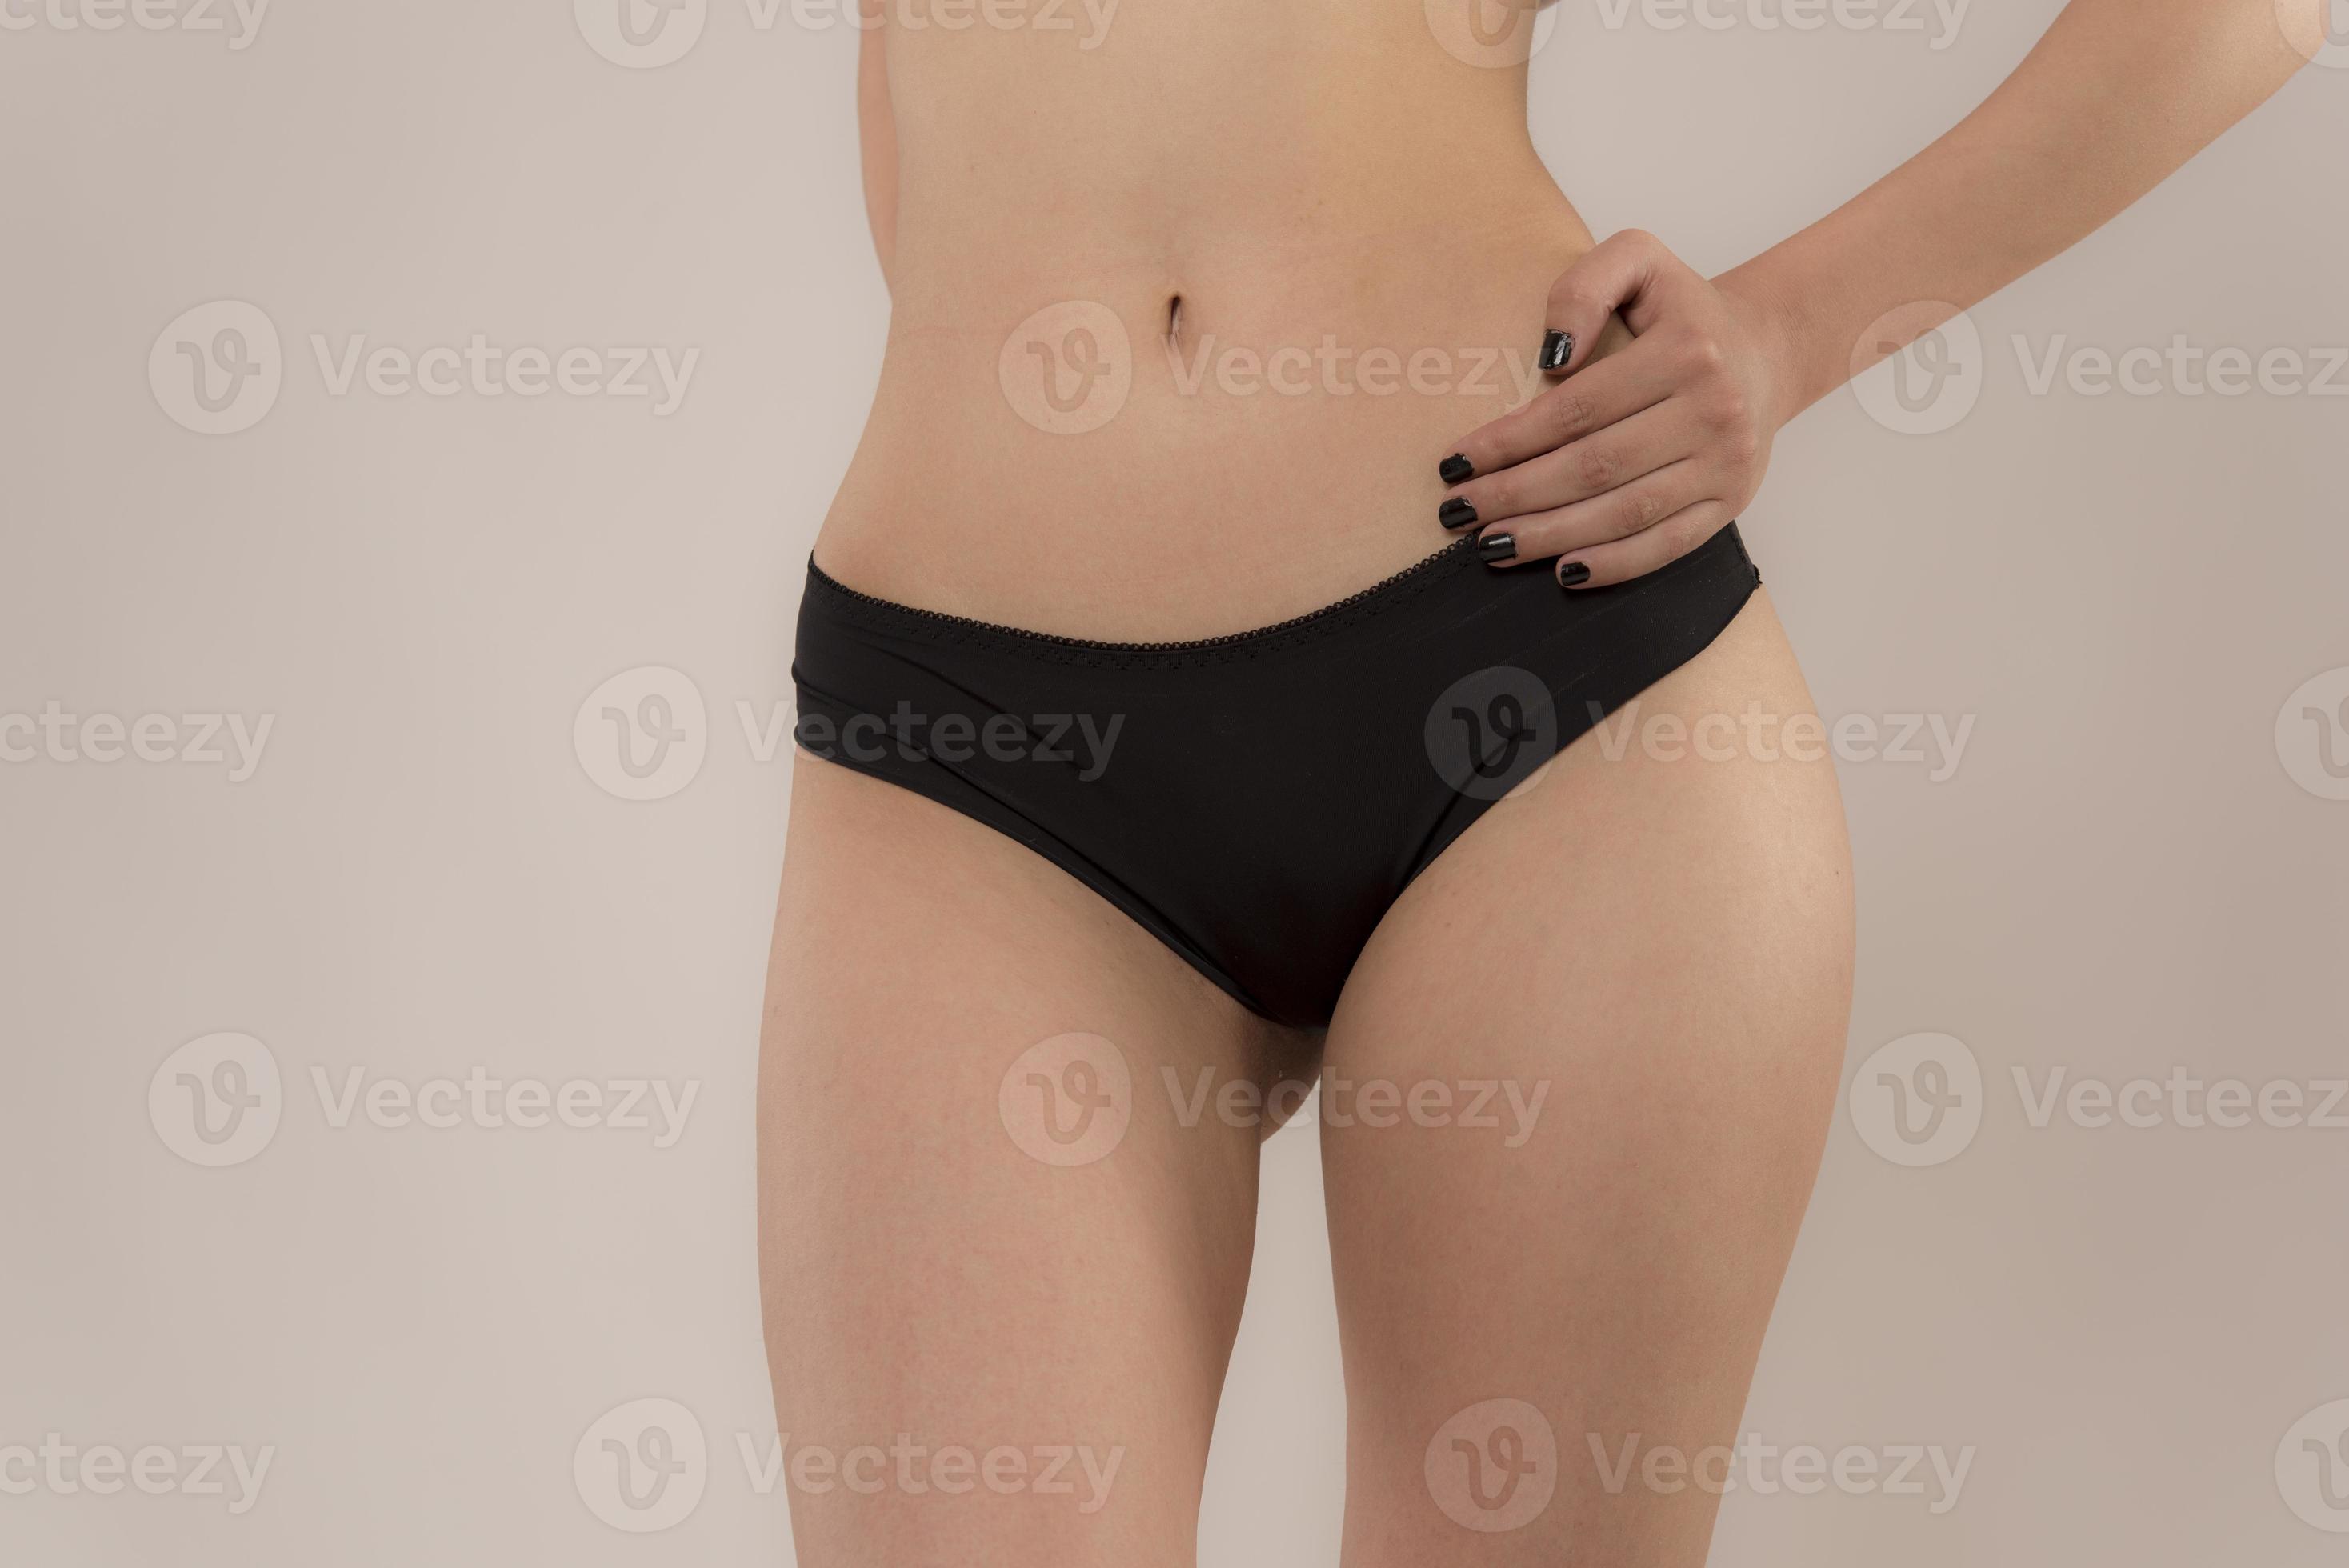 Woman with sportive slim body type in underwear 16606965 Stock